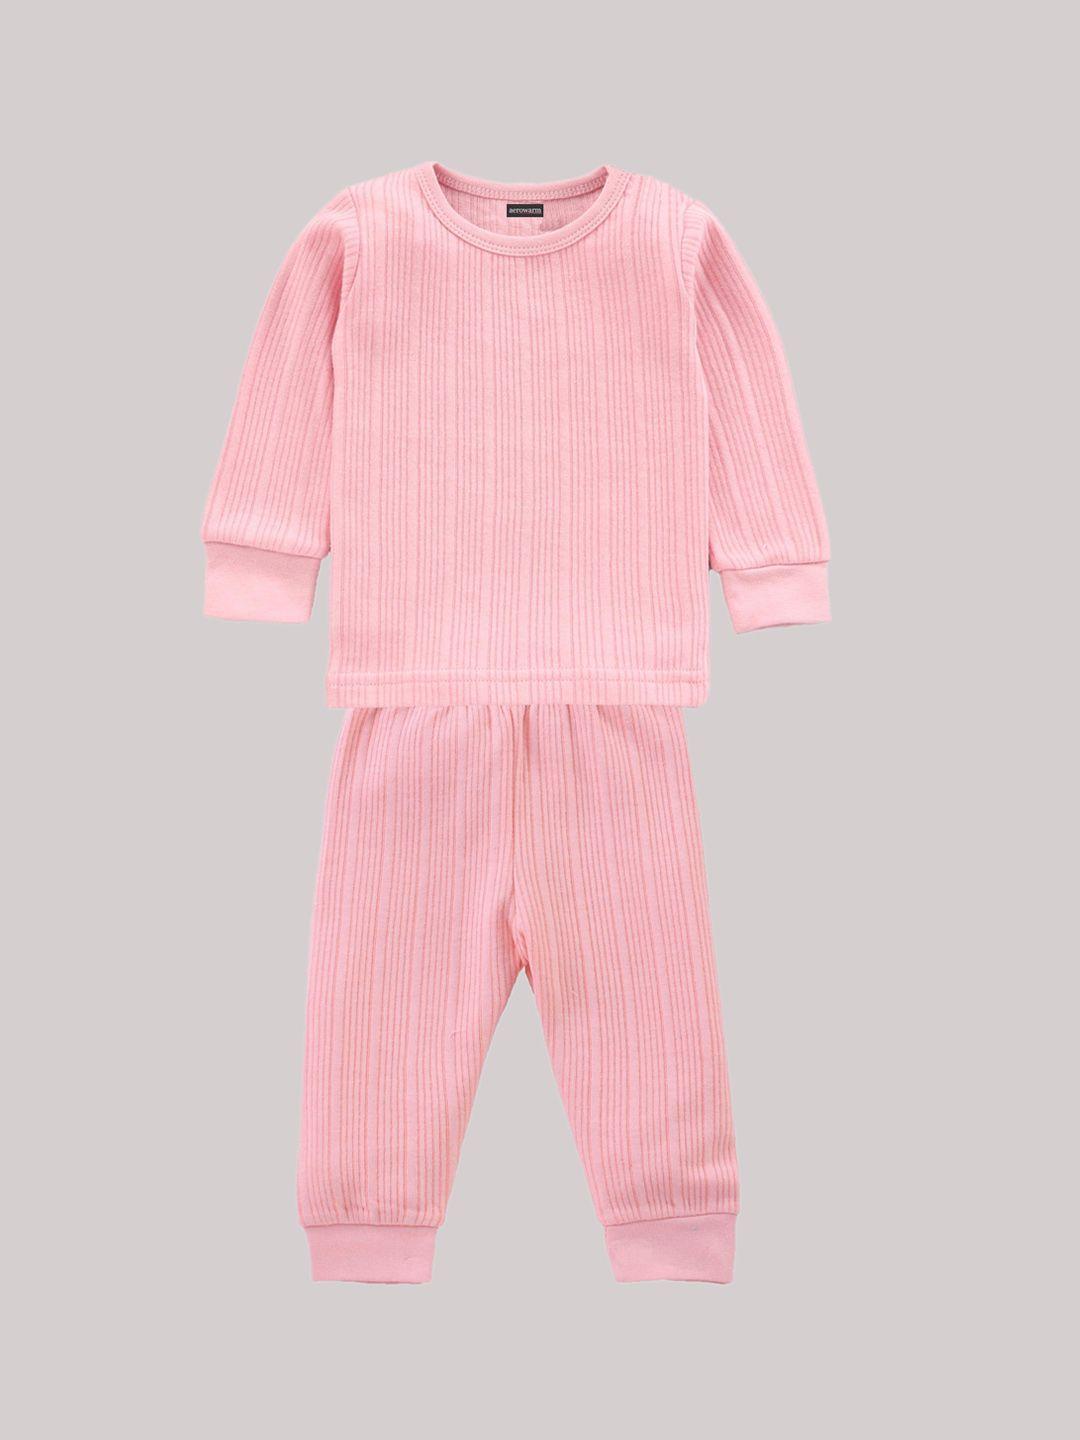 aerowarm infant pink solid thermal set